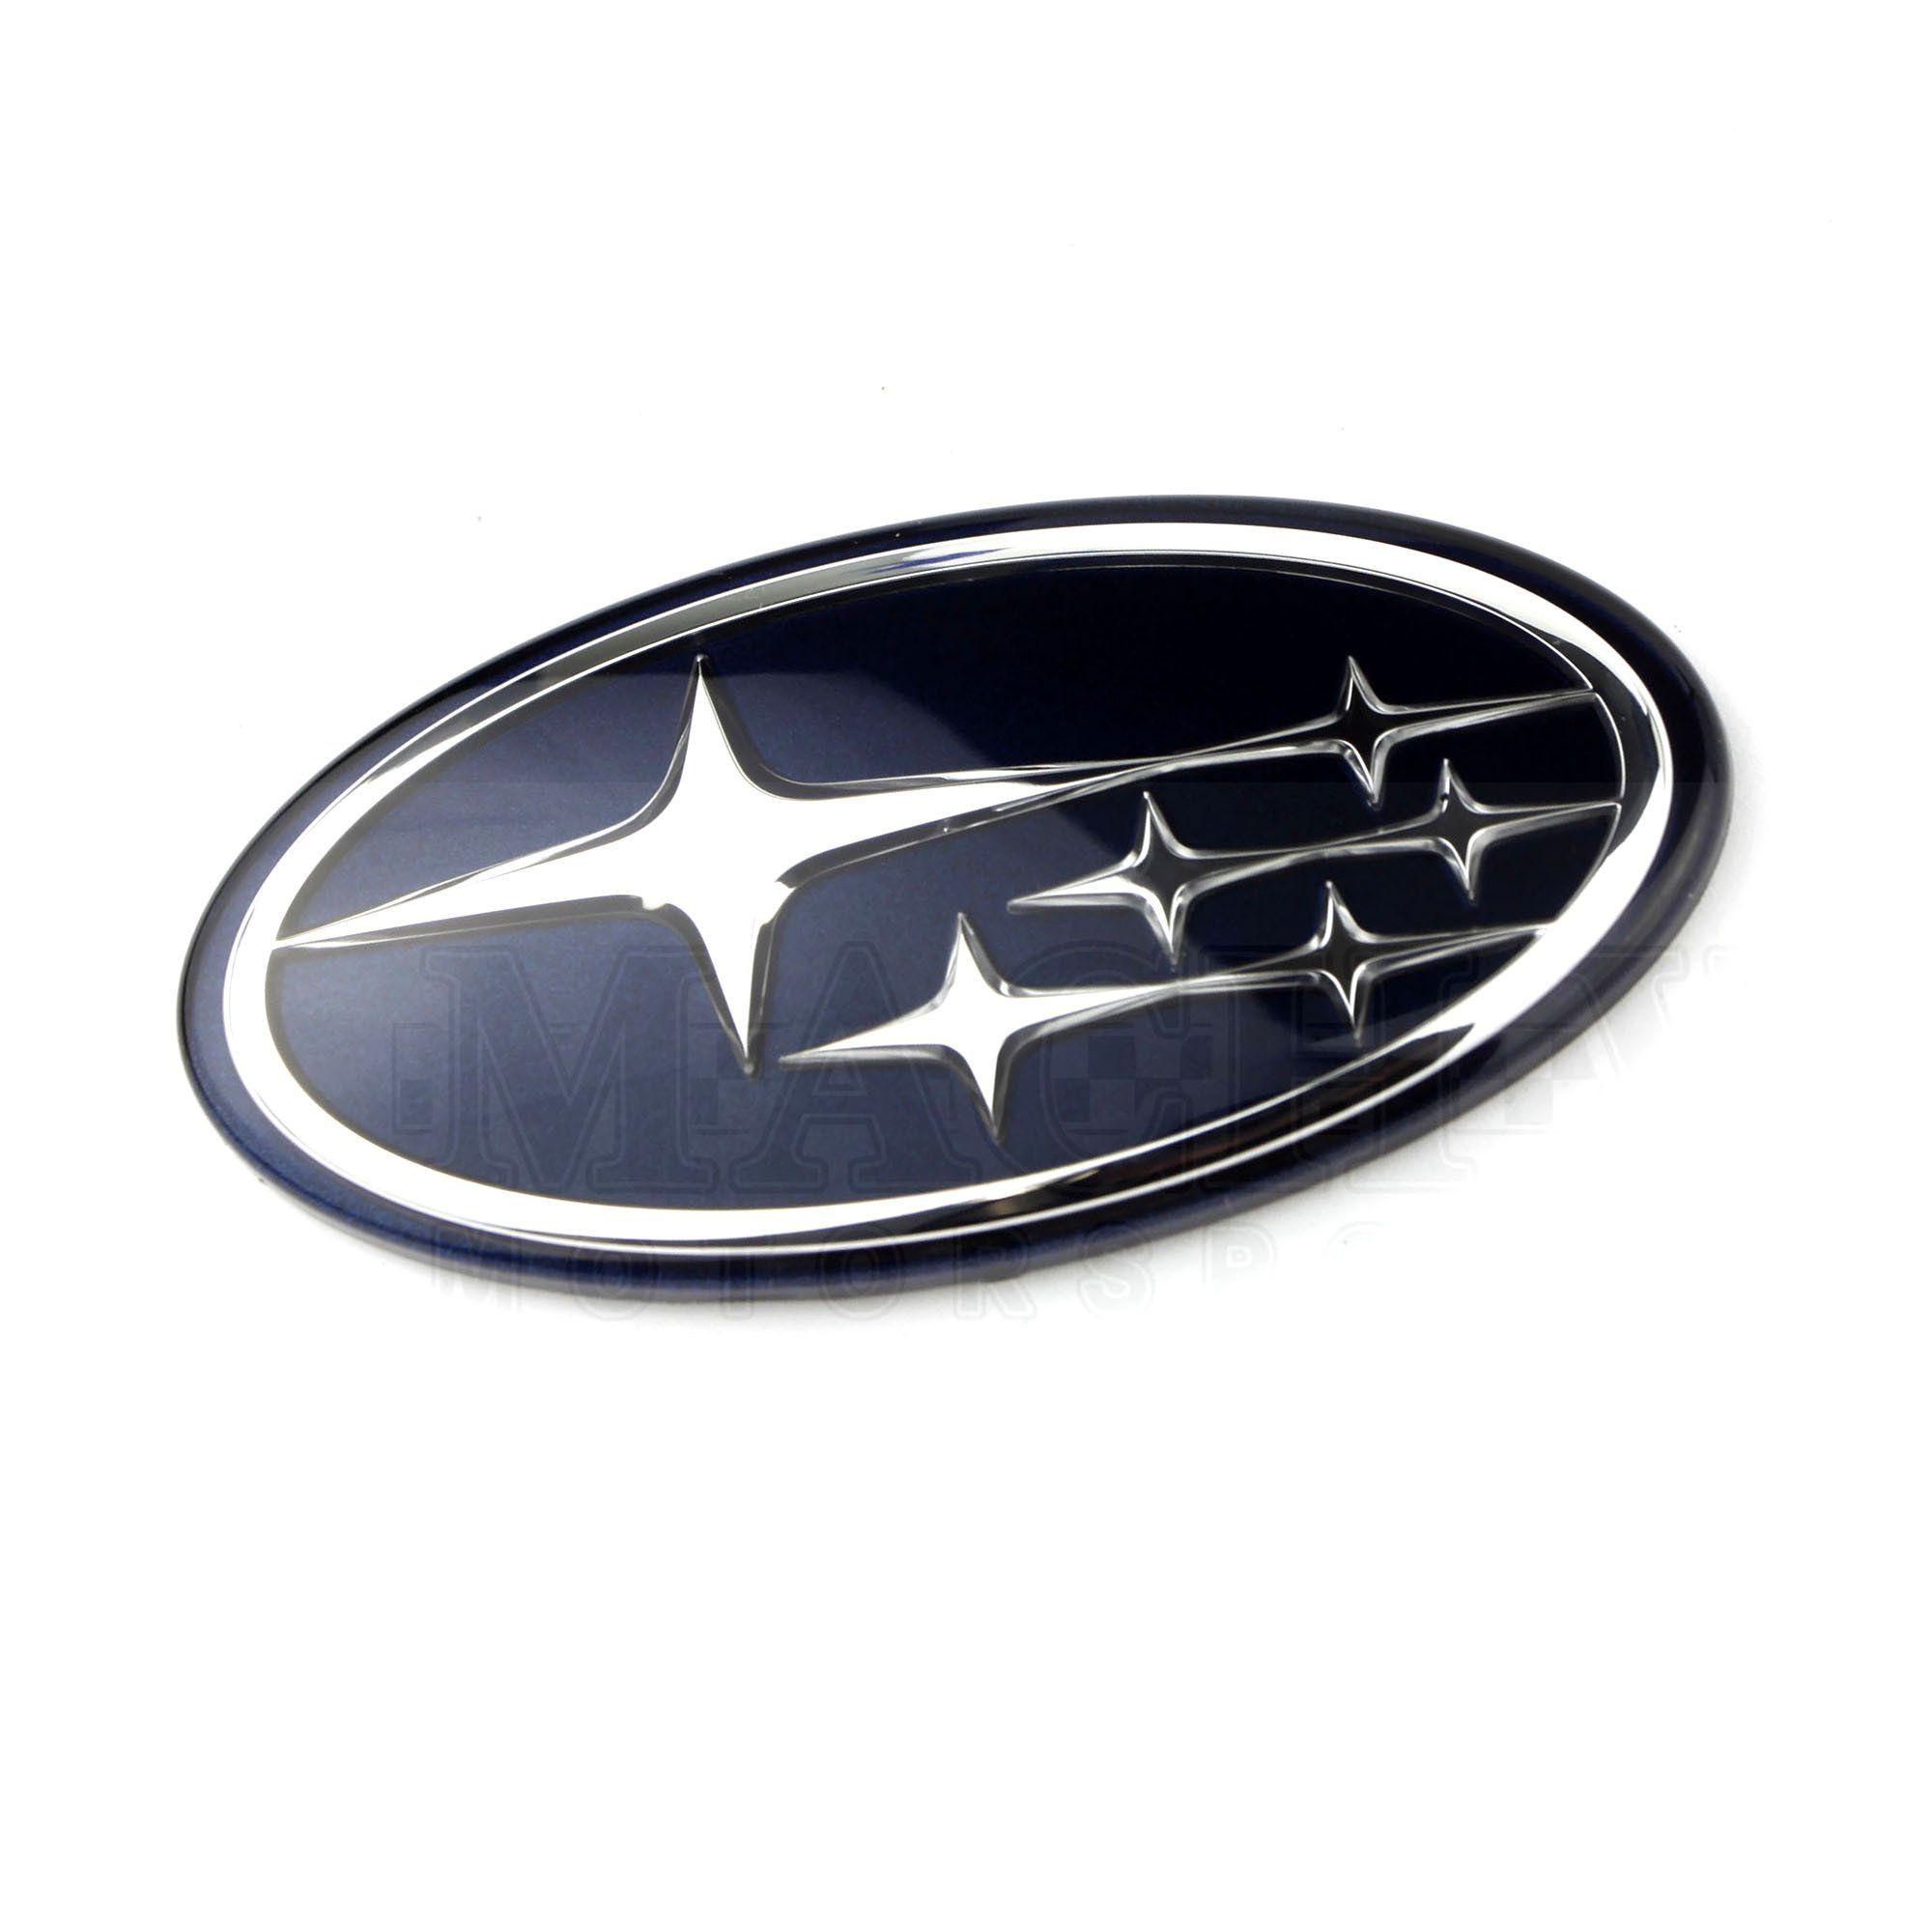 Subaru Grill Logo - Subaru OEM Six-Star Grill Badge 2002-2005 | FastWRX.com